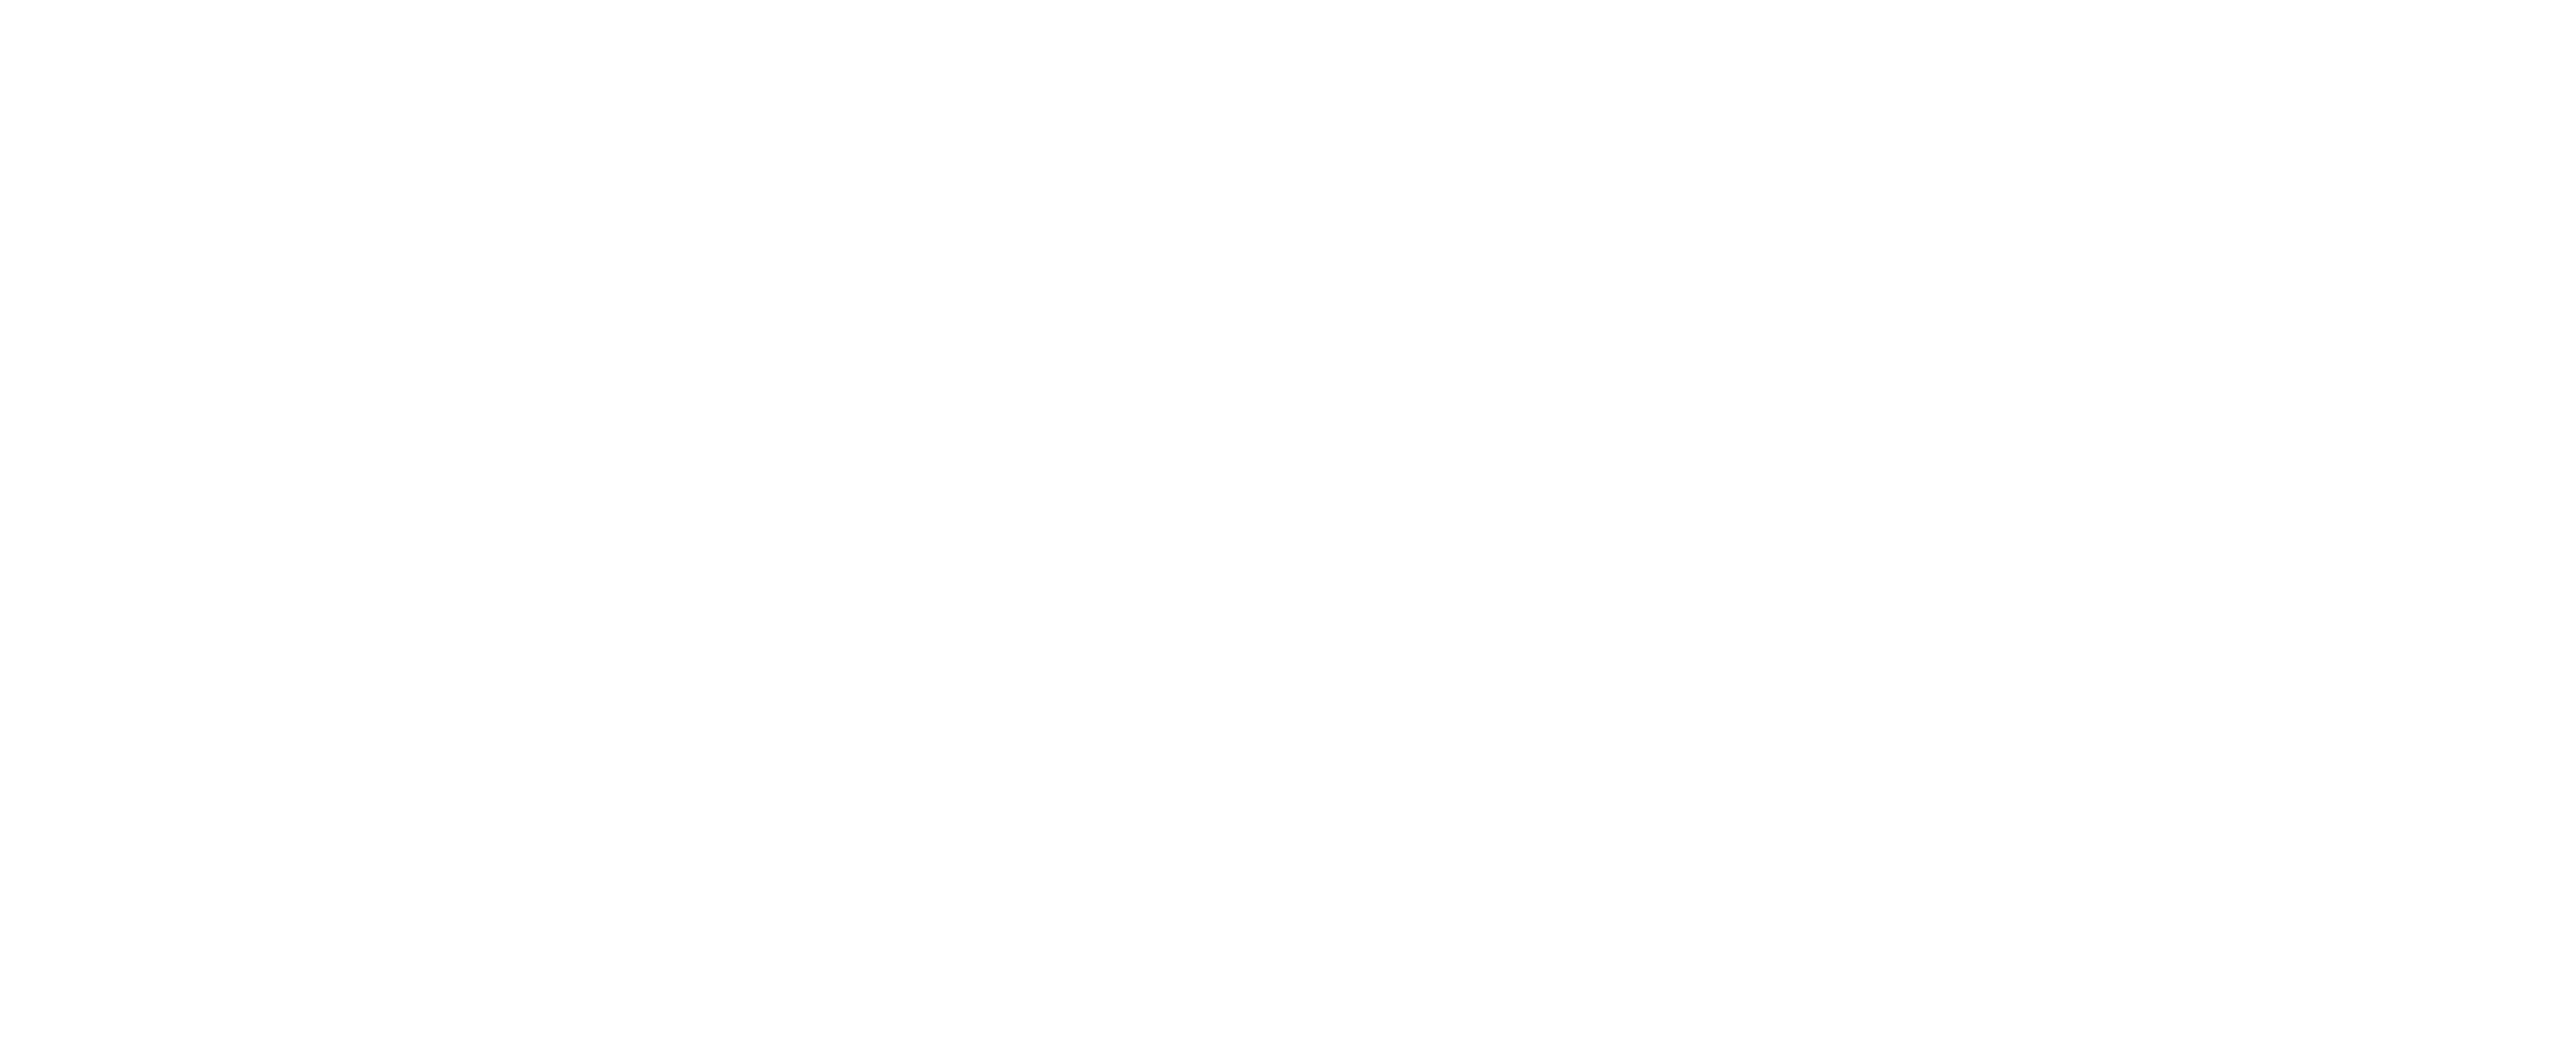 Habitat for Humanity Lake County